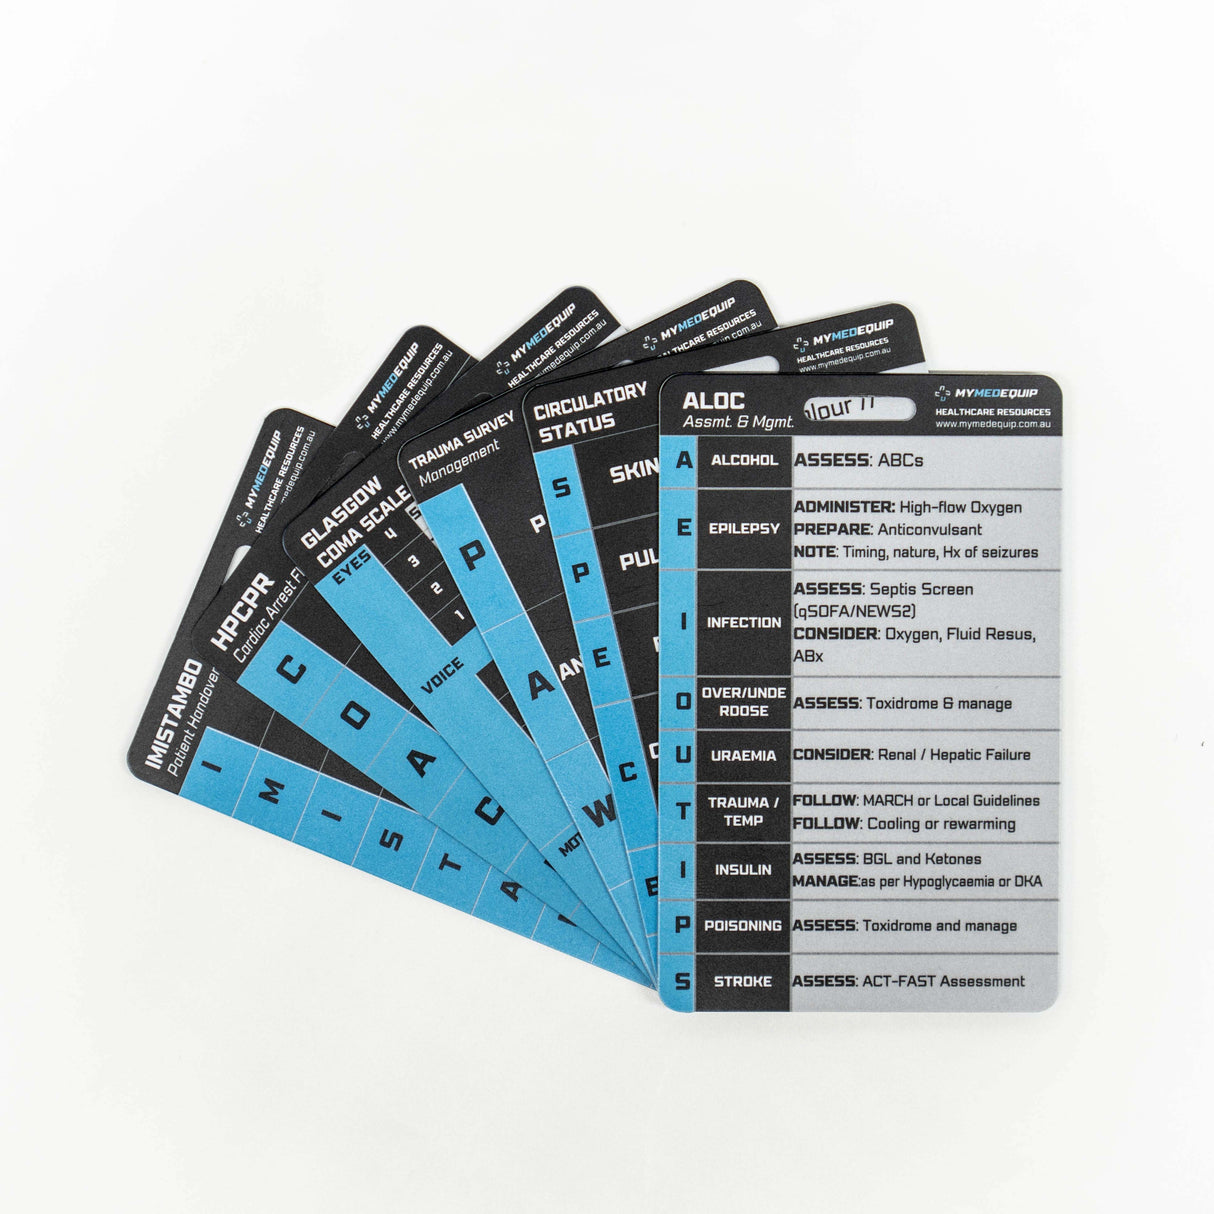 Paramedic Emergency Medical Reference Cards - Full Set